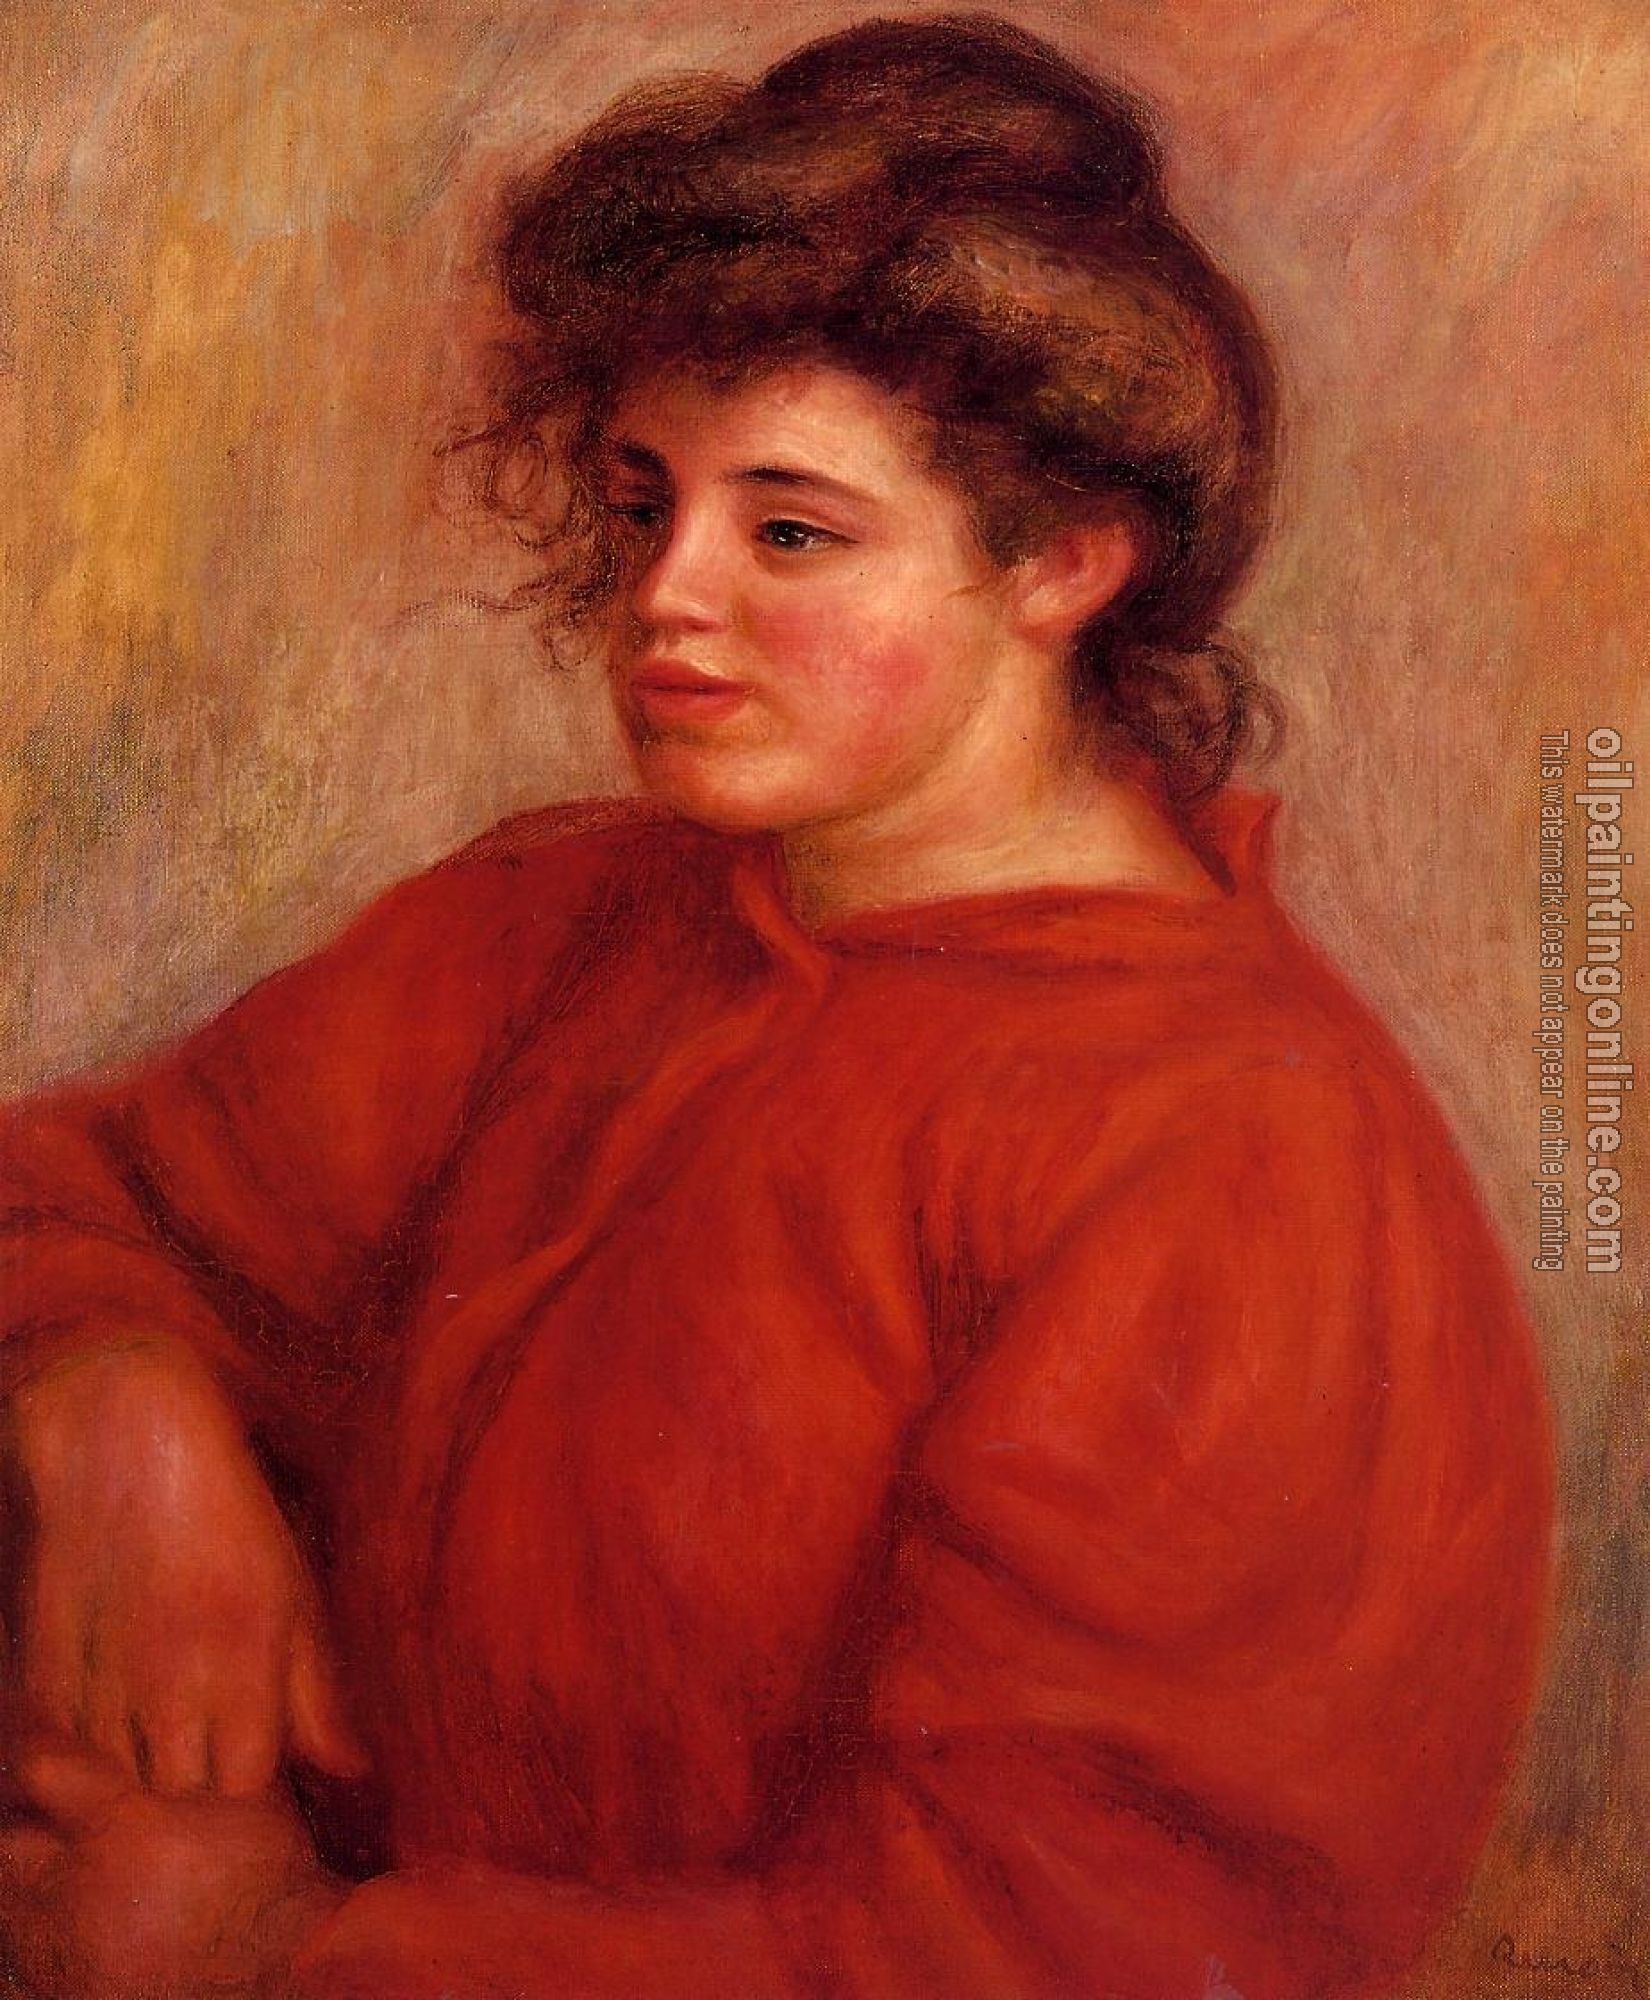 Renoir, Pierre Auguste - Woman in a Red Blouse